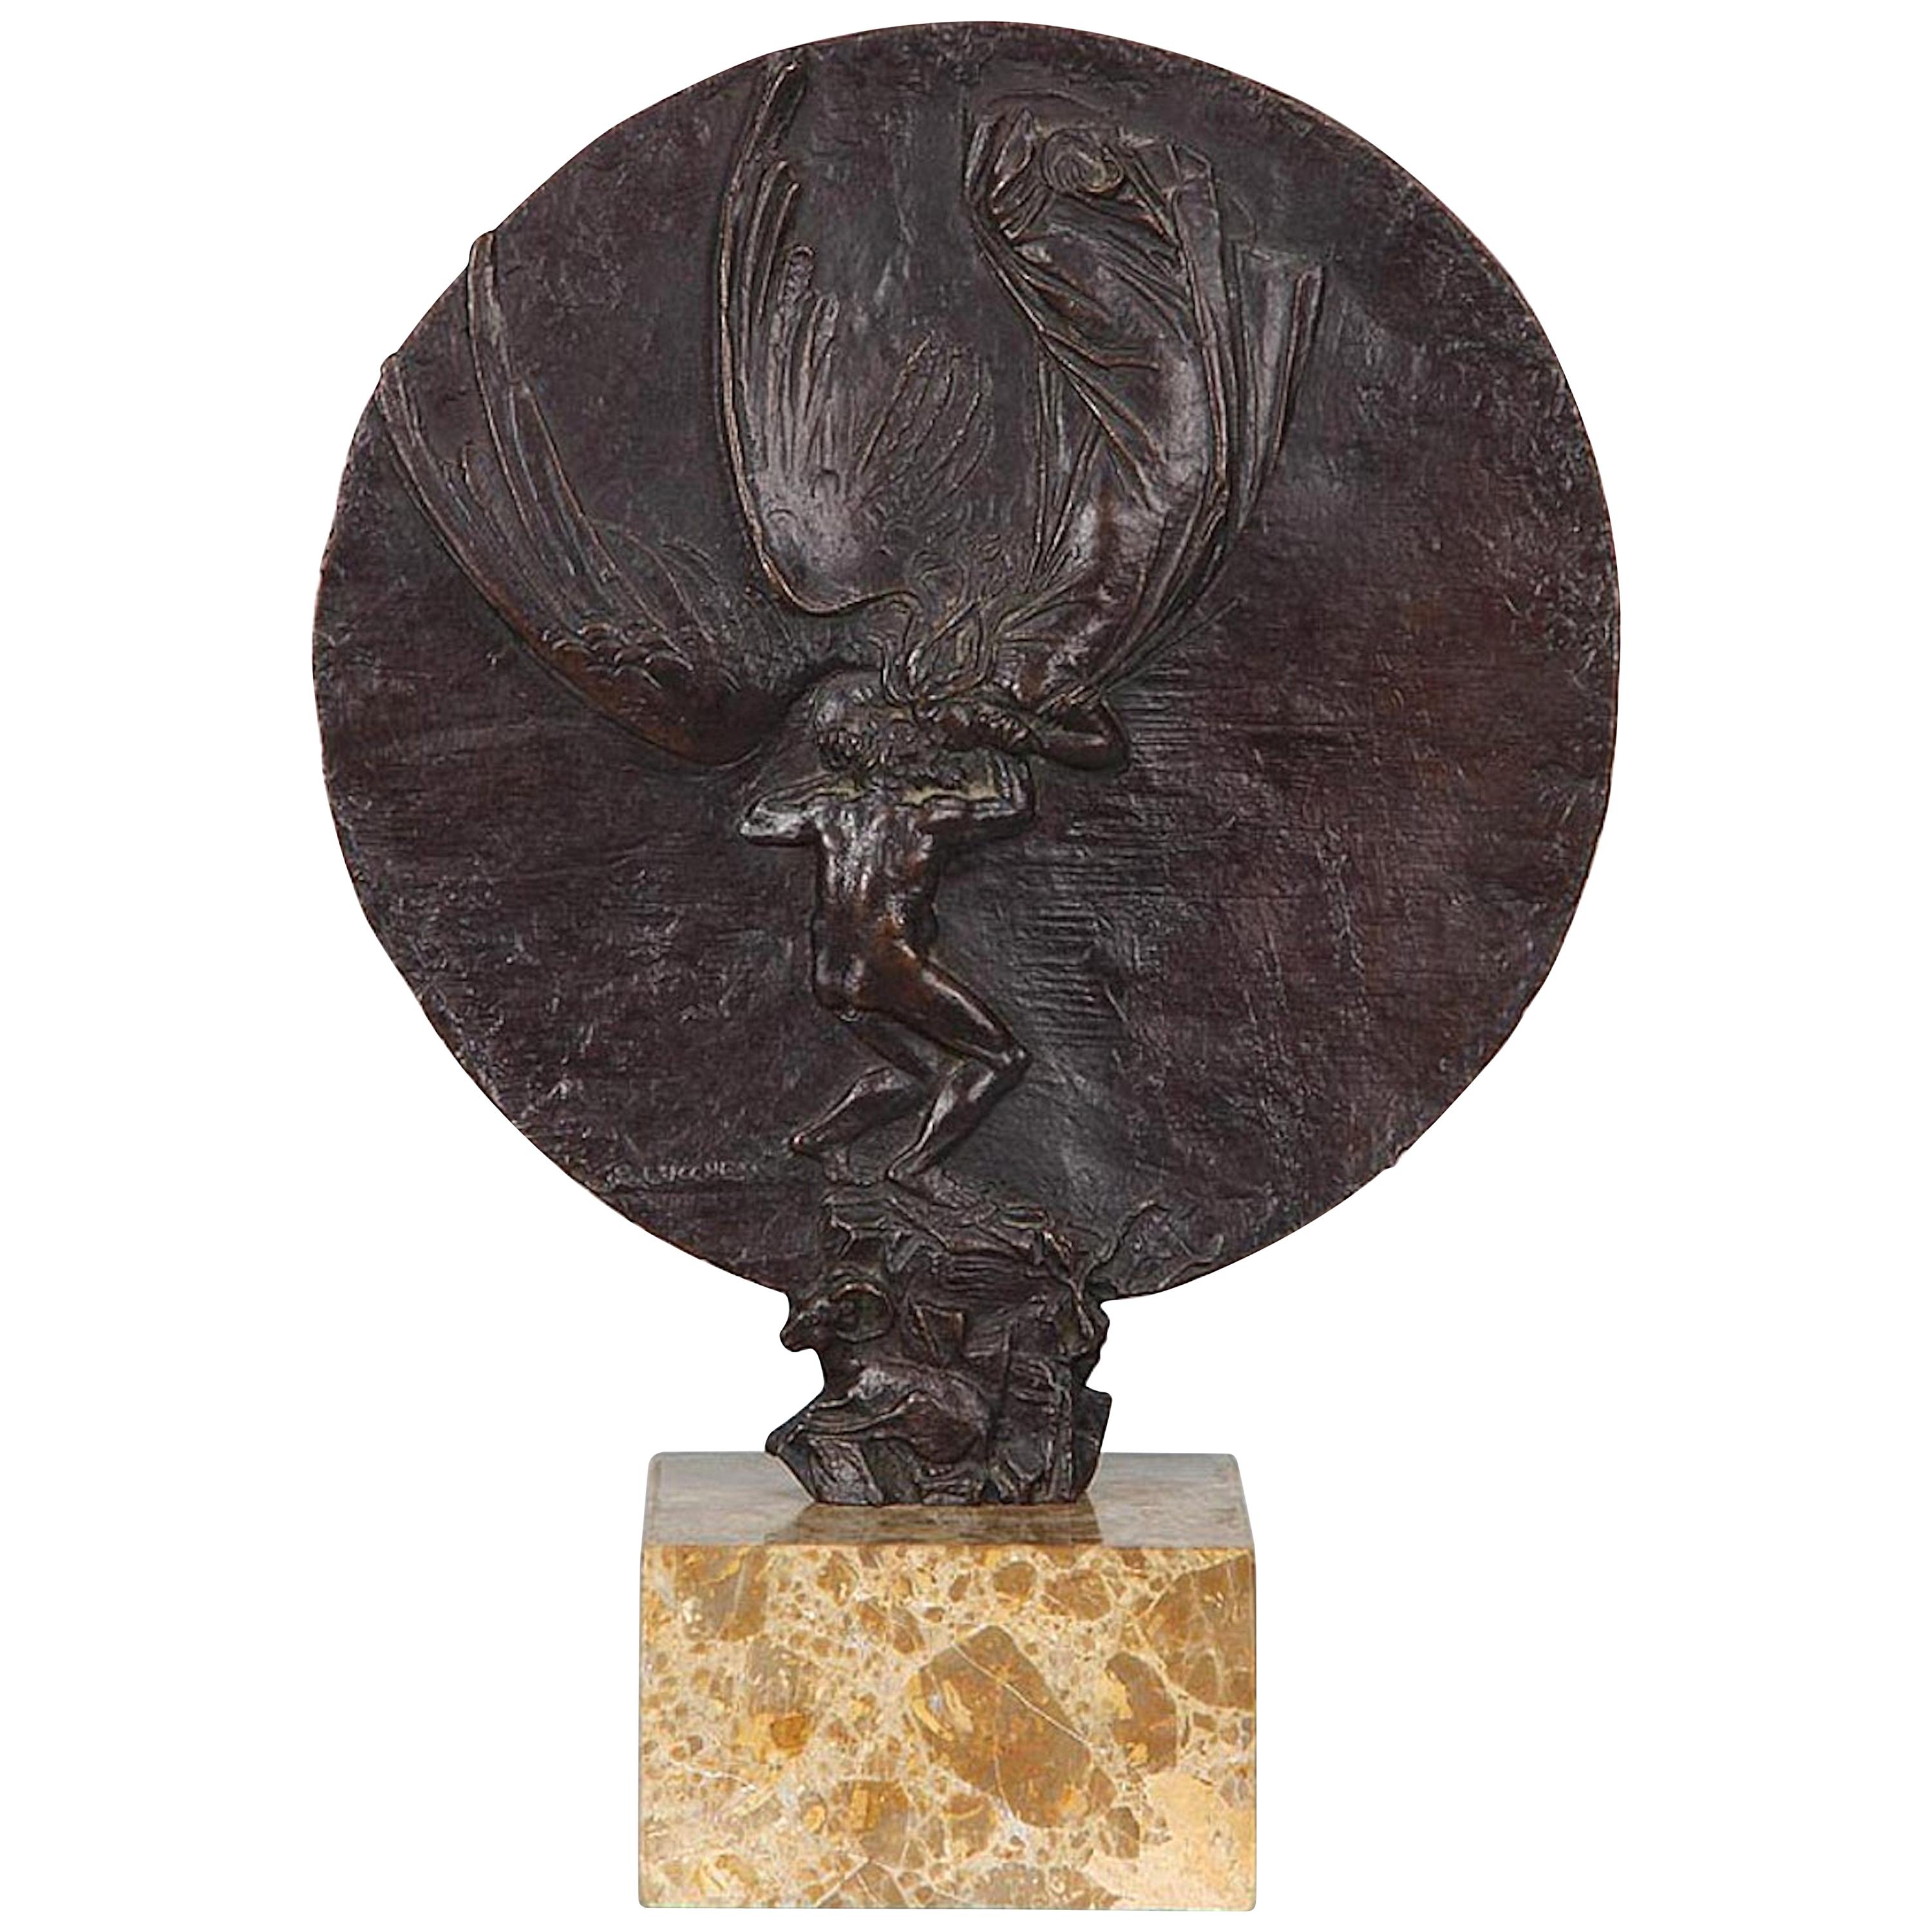 "Jacob and the Angel" (Jacob et l'ange) Sculpture en bronze de Bruno Lucchesi